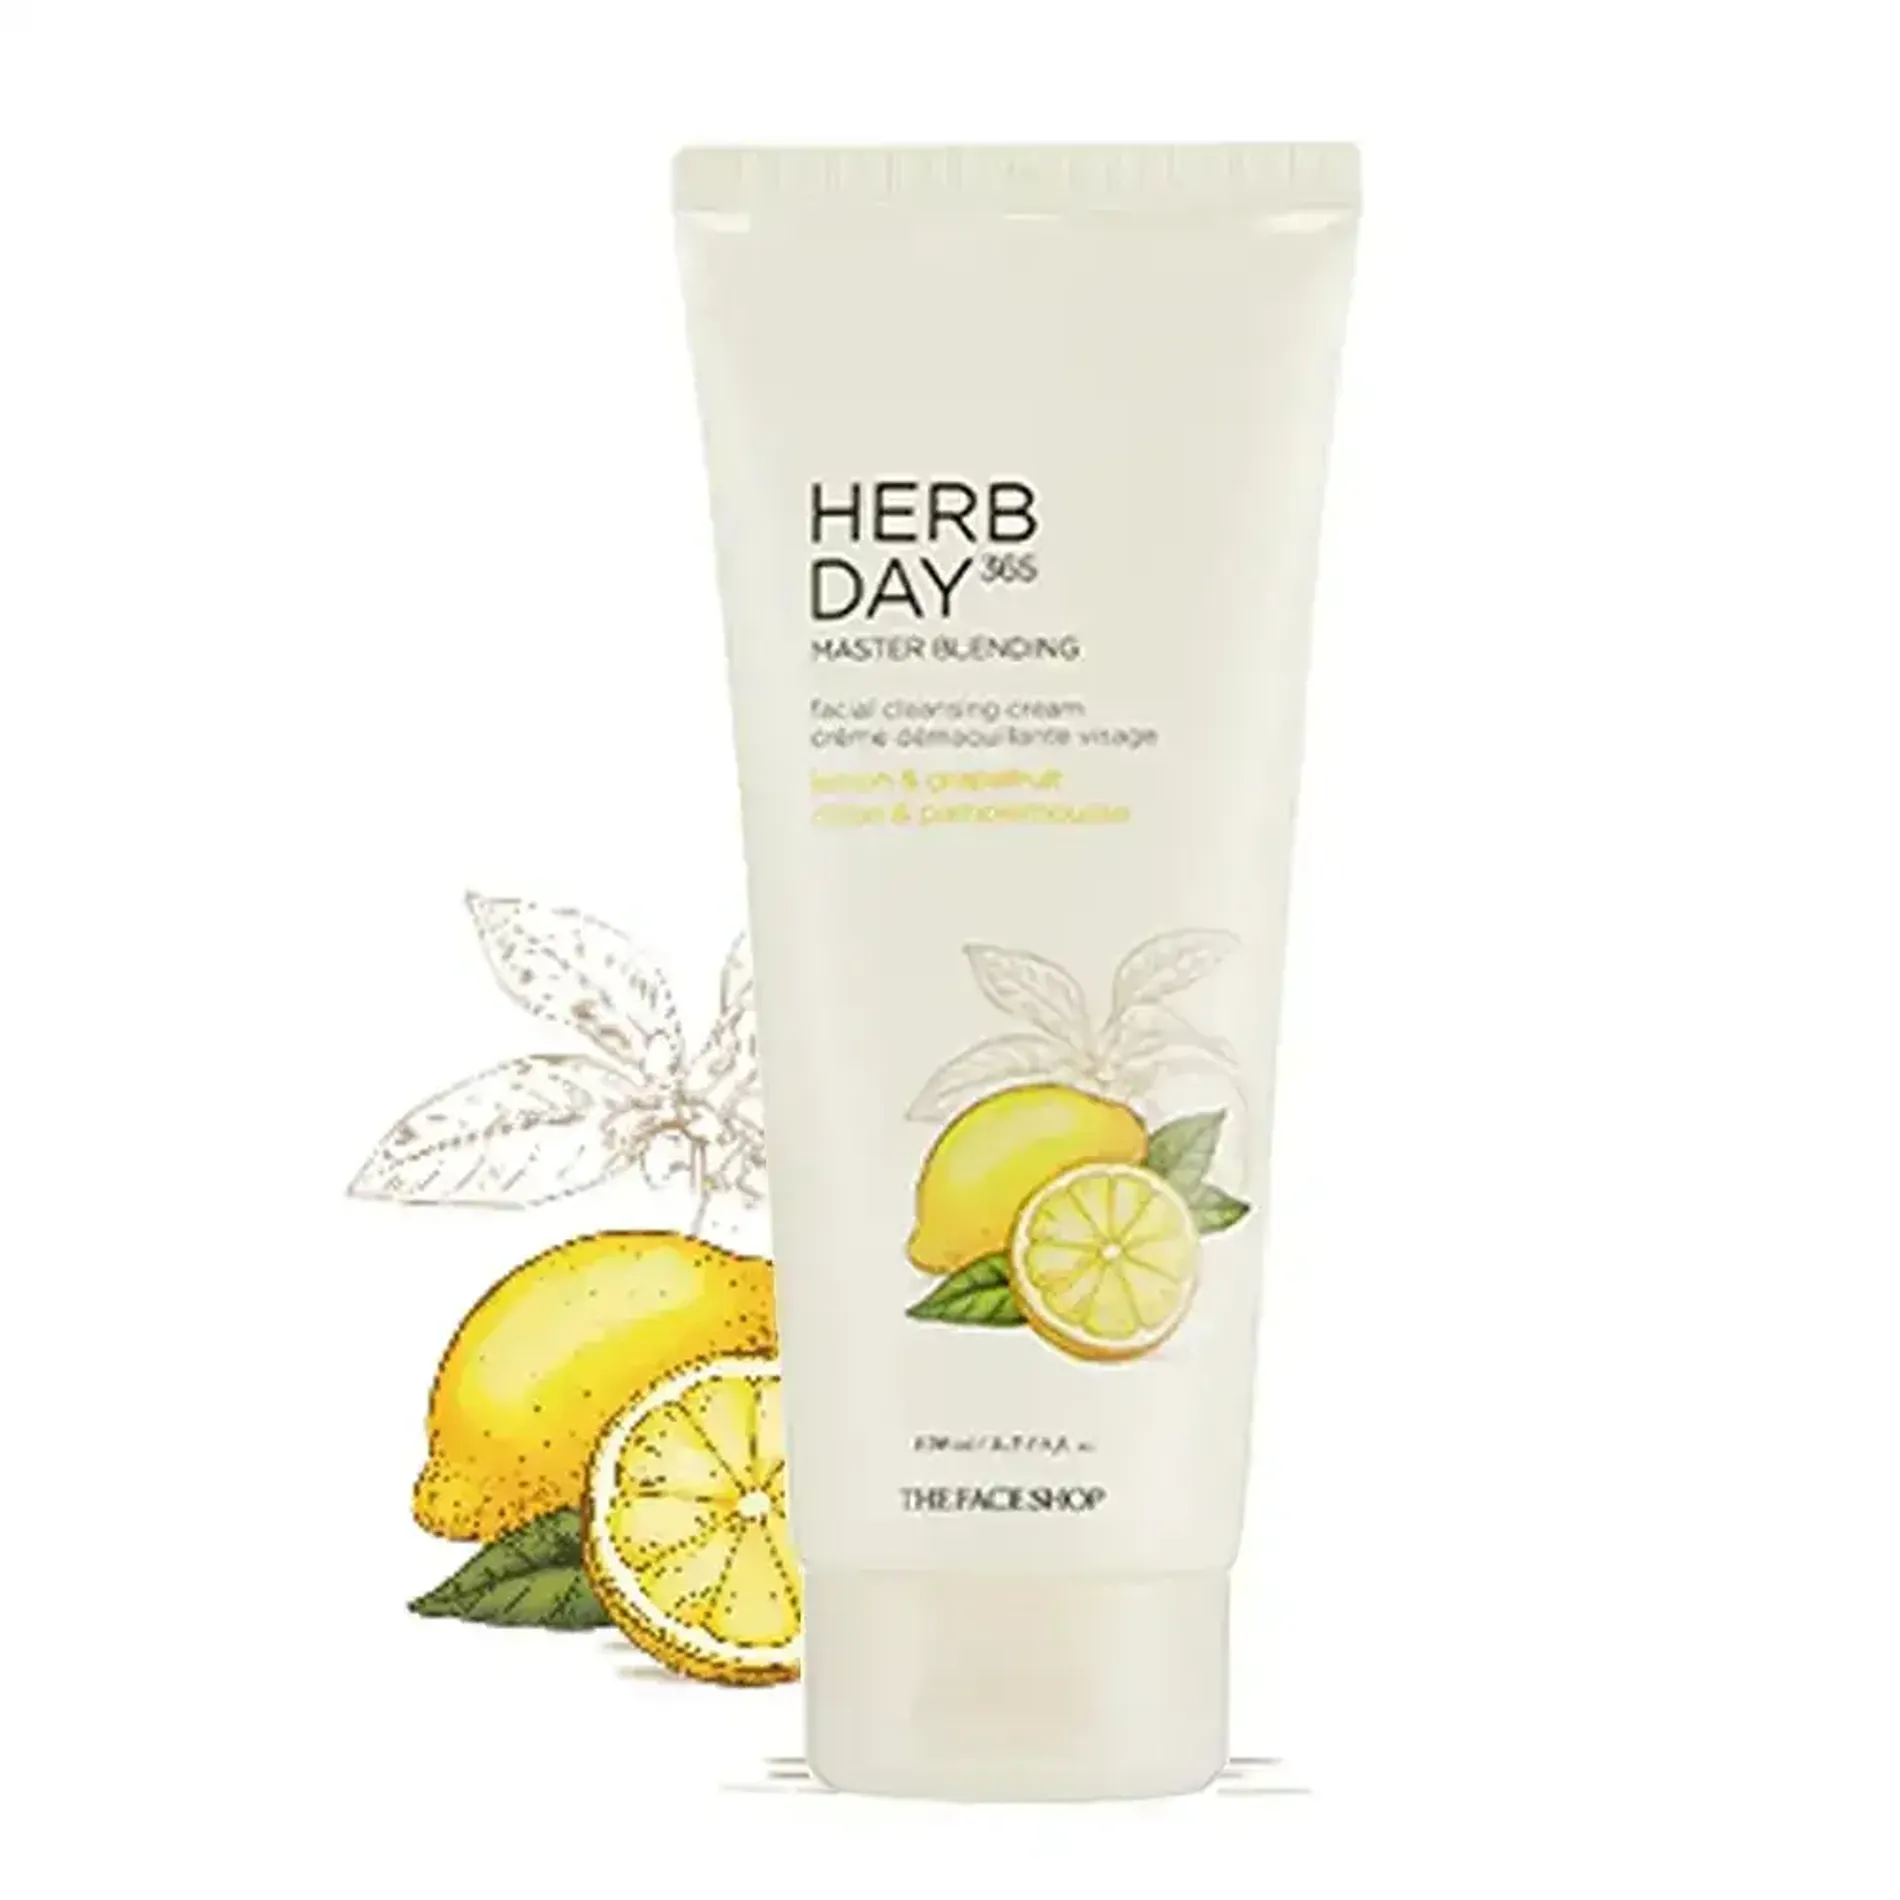 kem-tay-trang-herb-day-365-master-blending-facial-cleansing-cream-lemon-grapefruit-170ml-1